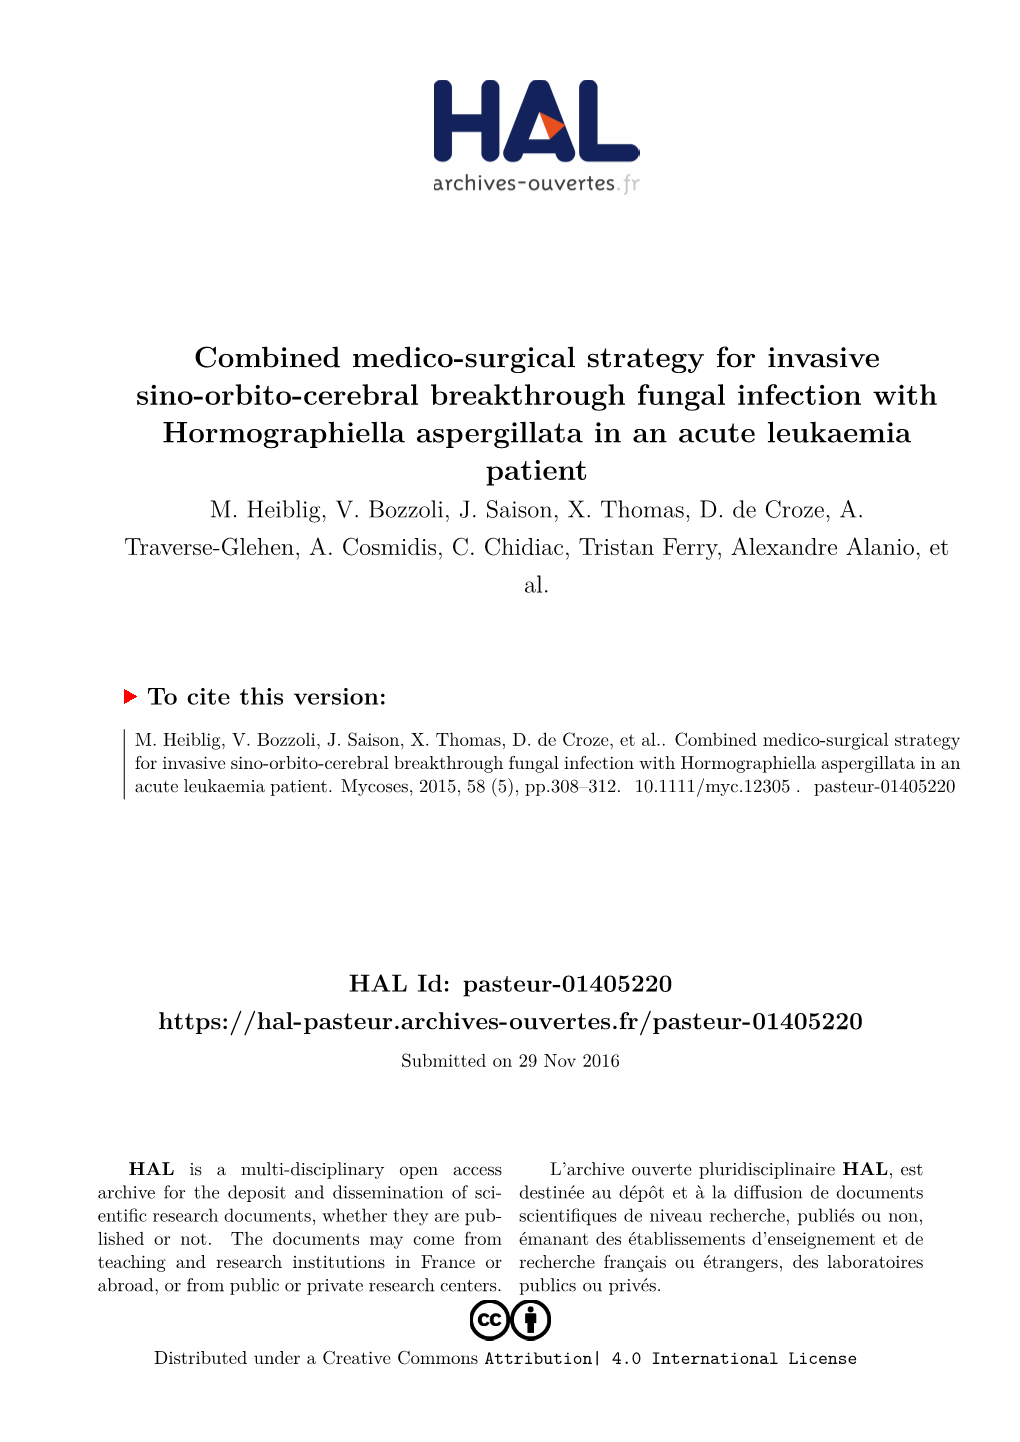 Combined Medico-Surgical Strategy for Invasive Sino-Orbito-Cerebral Breakthrough Fungal Infection with Hormographiella Aspergillata in an Acute Leukaemia Patient M